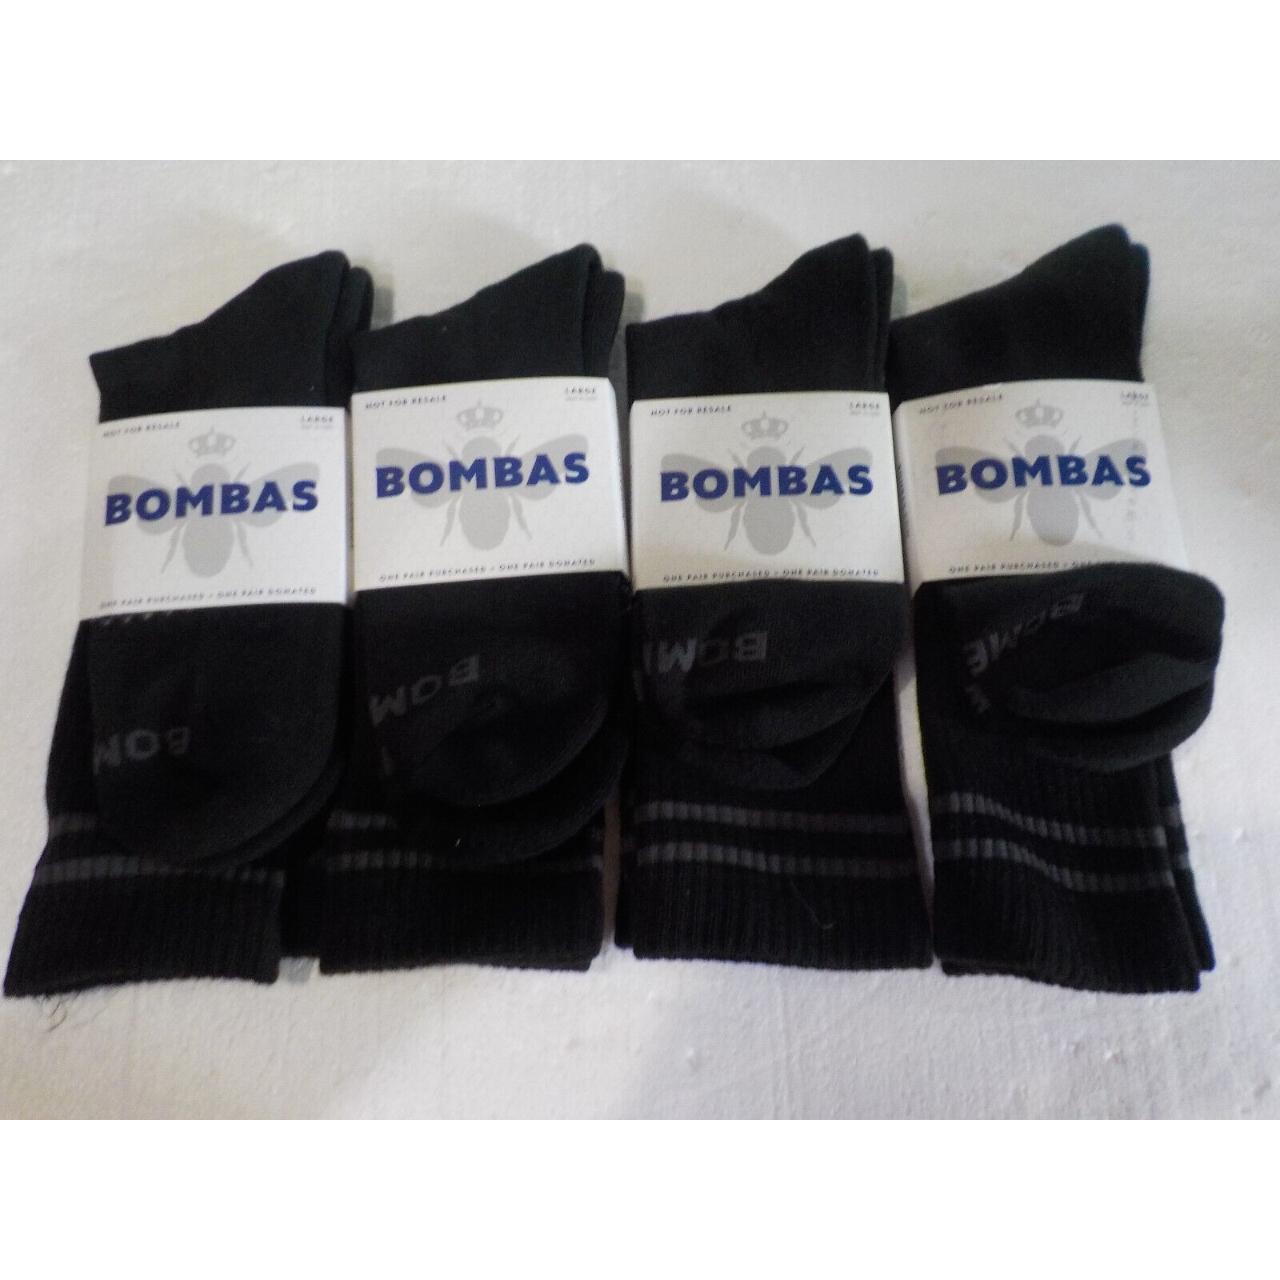 Bombas Men's Black and Grey Socks